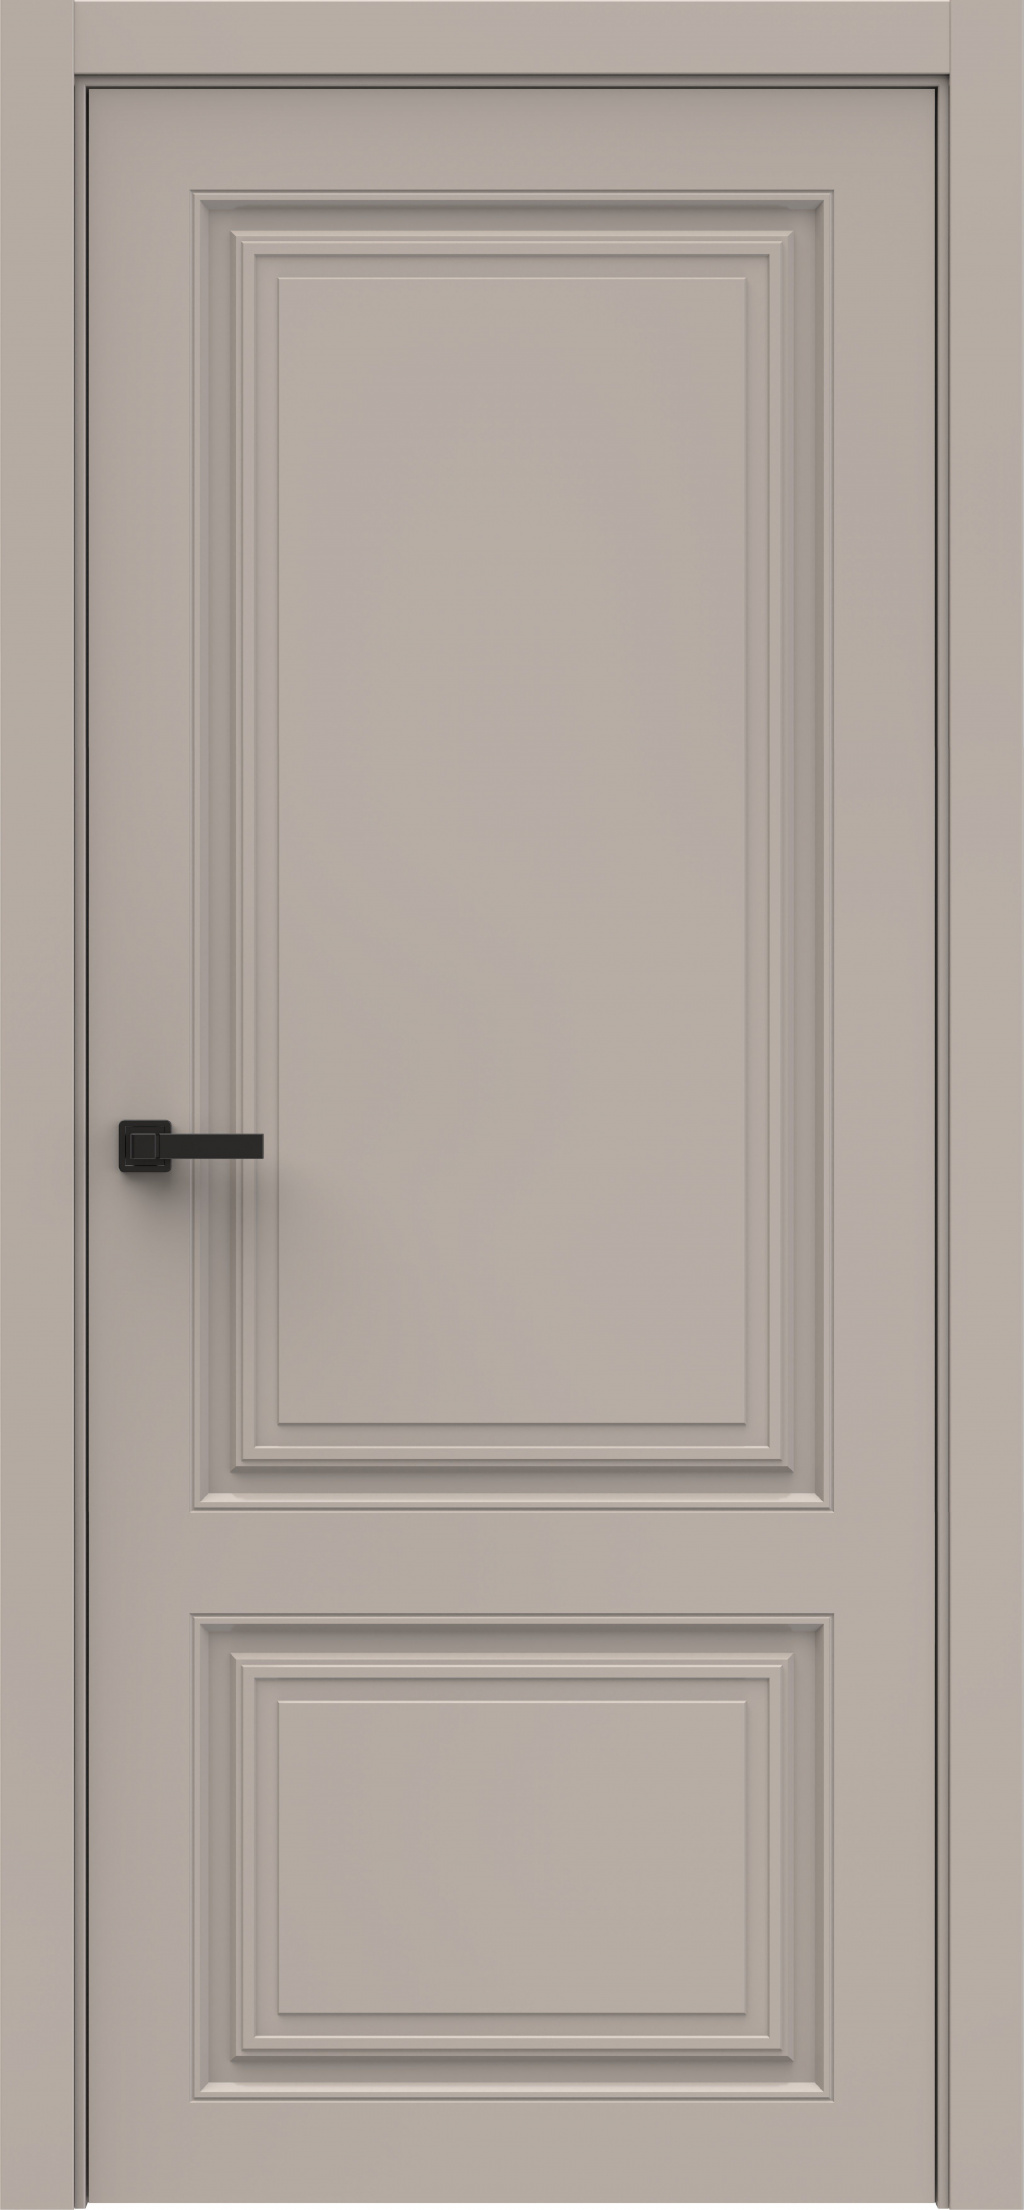 Questdoors Межкомнатная дверь QBS 1, арт. 23471 - фото №1